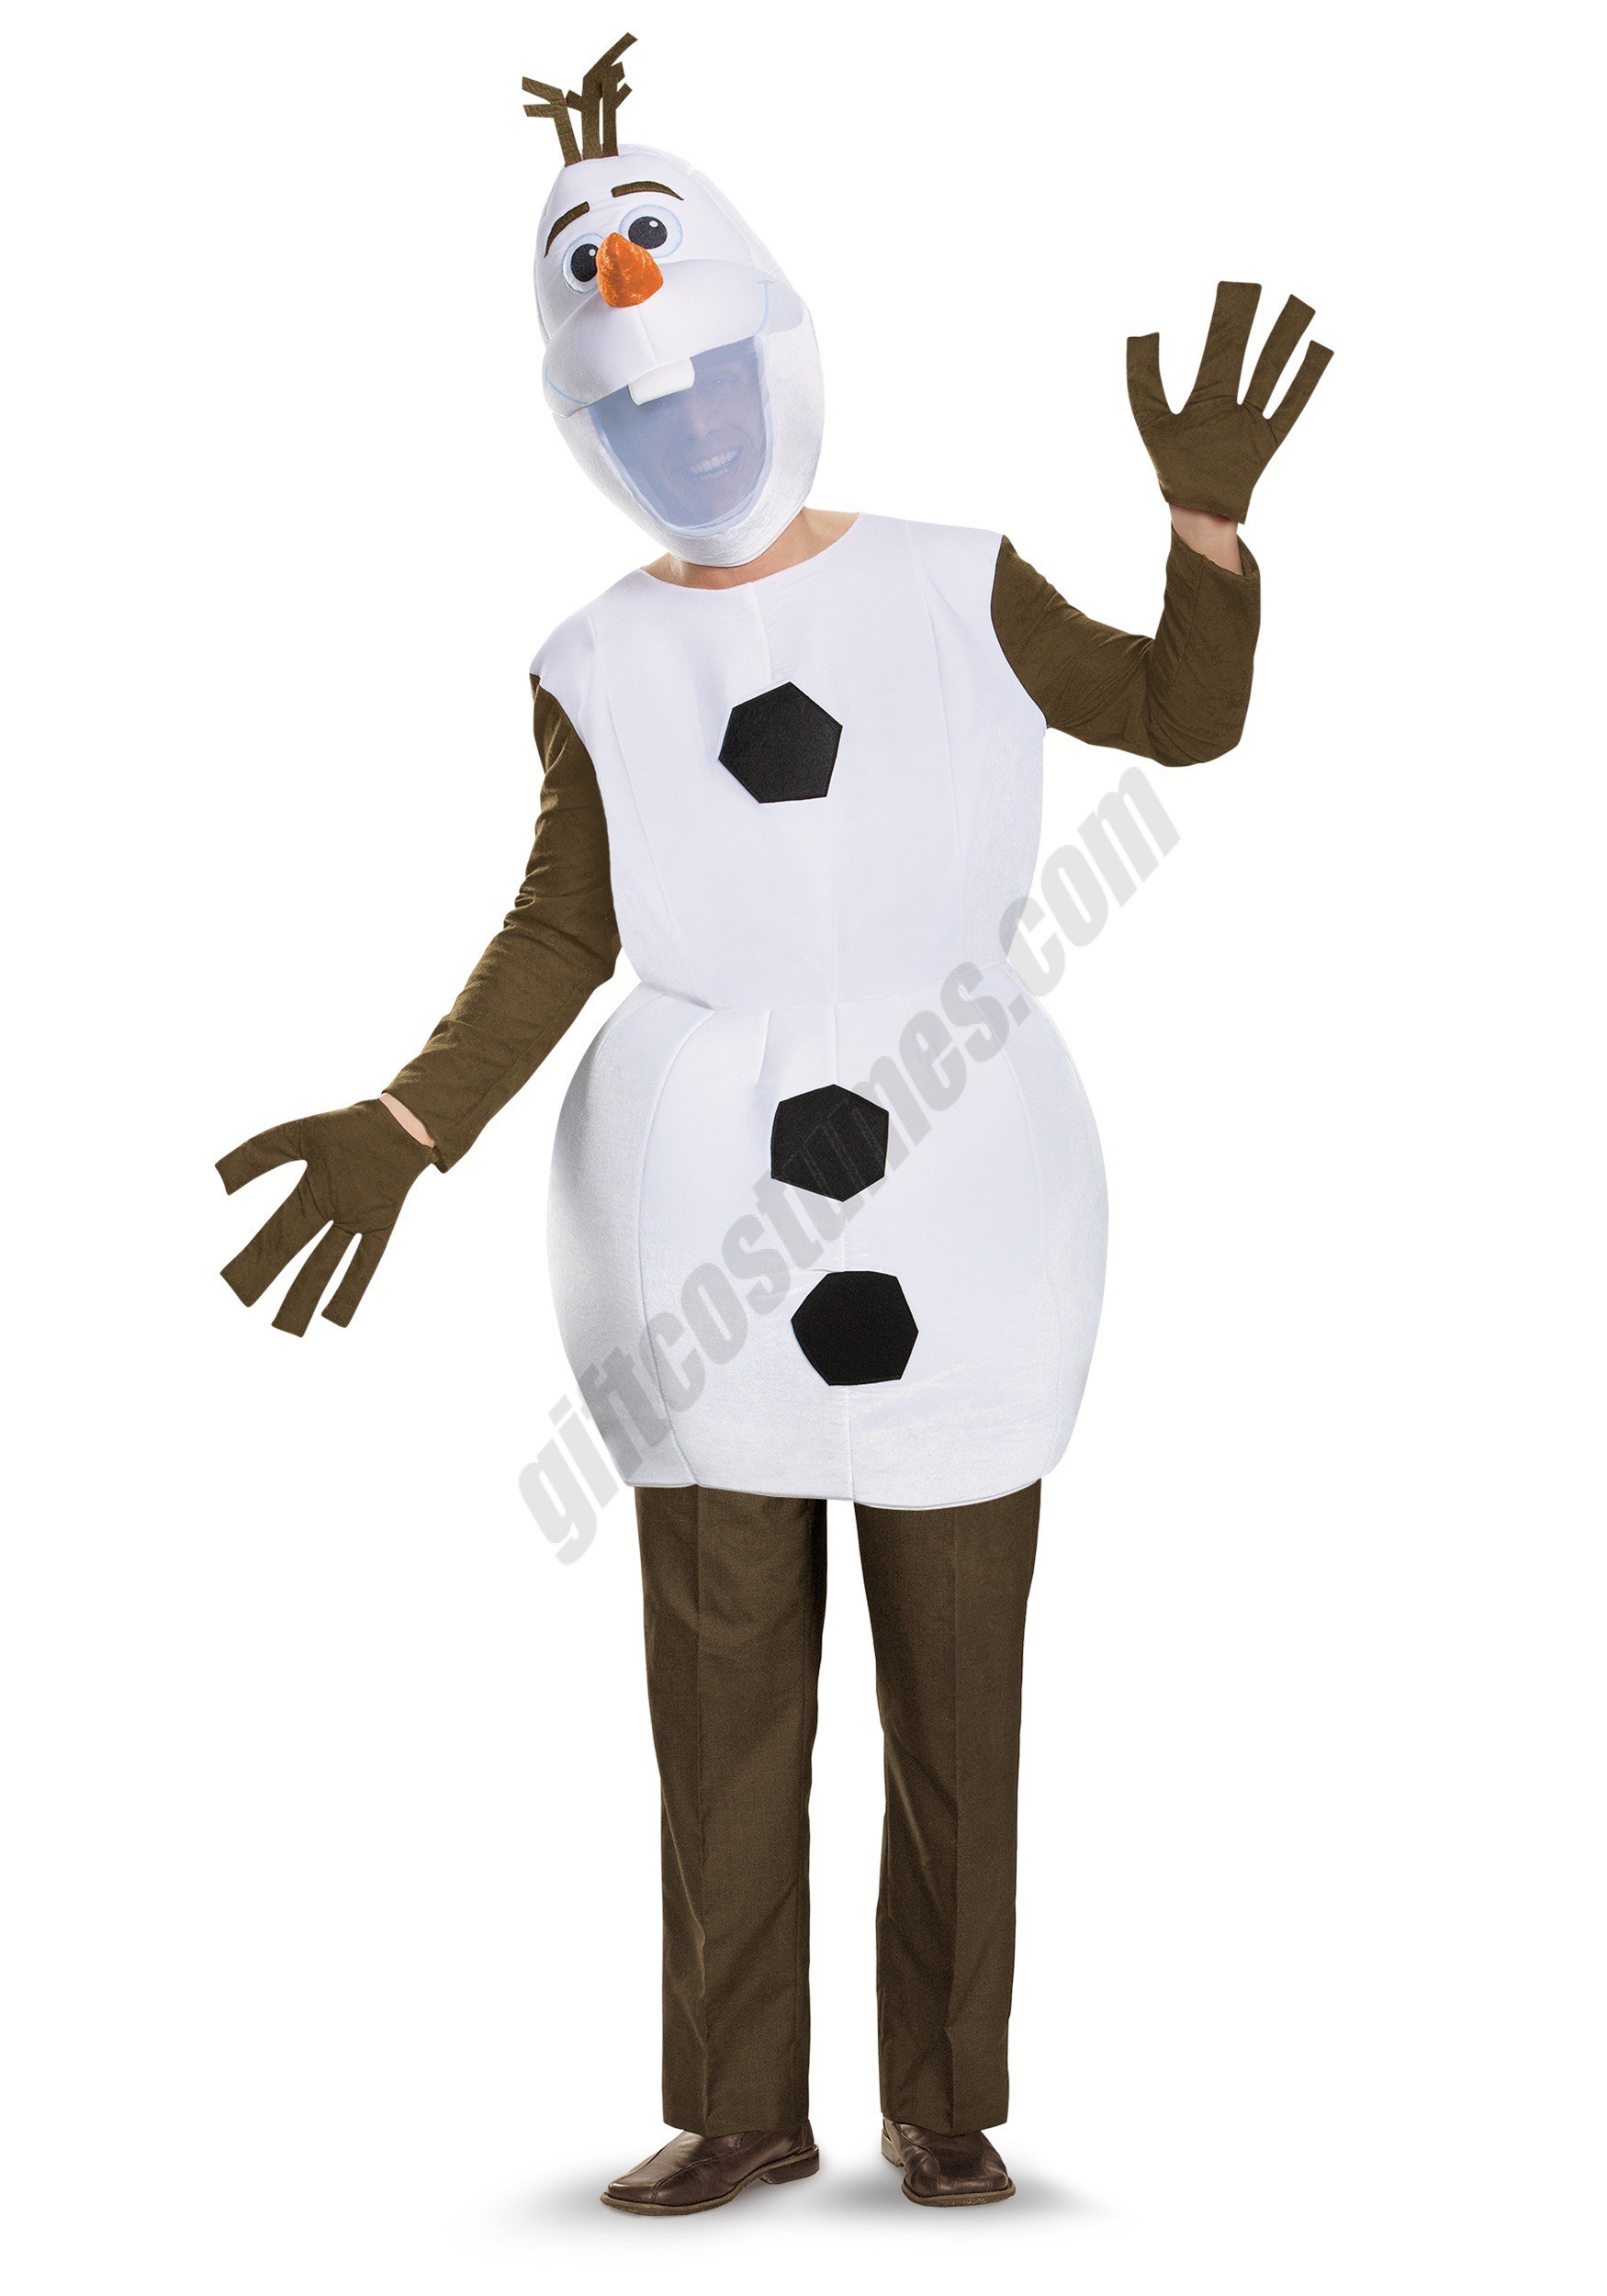 Plus Size Adult Olaf Costume Promotions - Plus Size Adult Olaf Costume Promotions